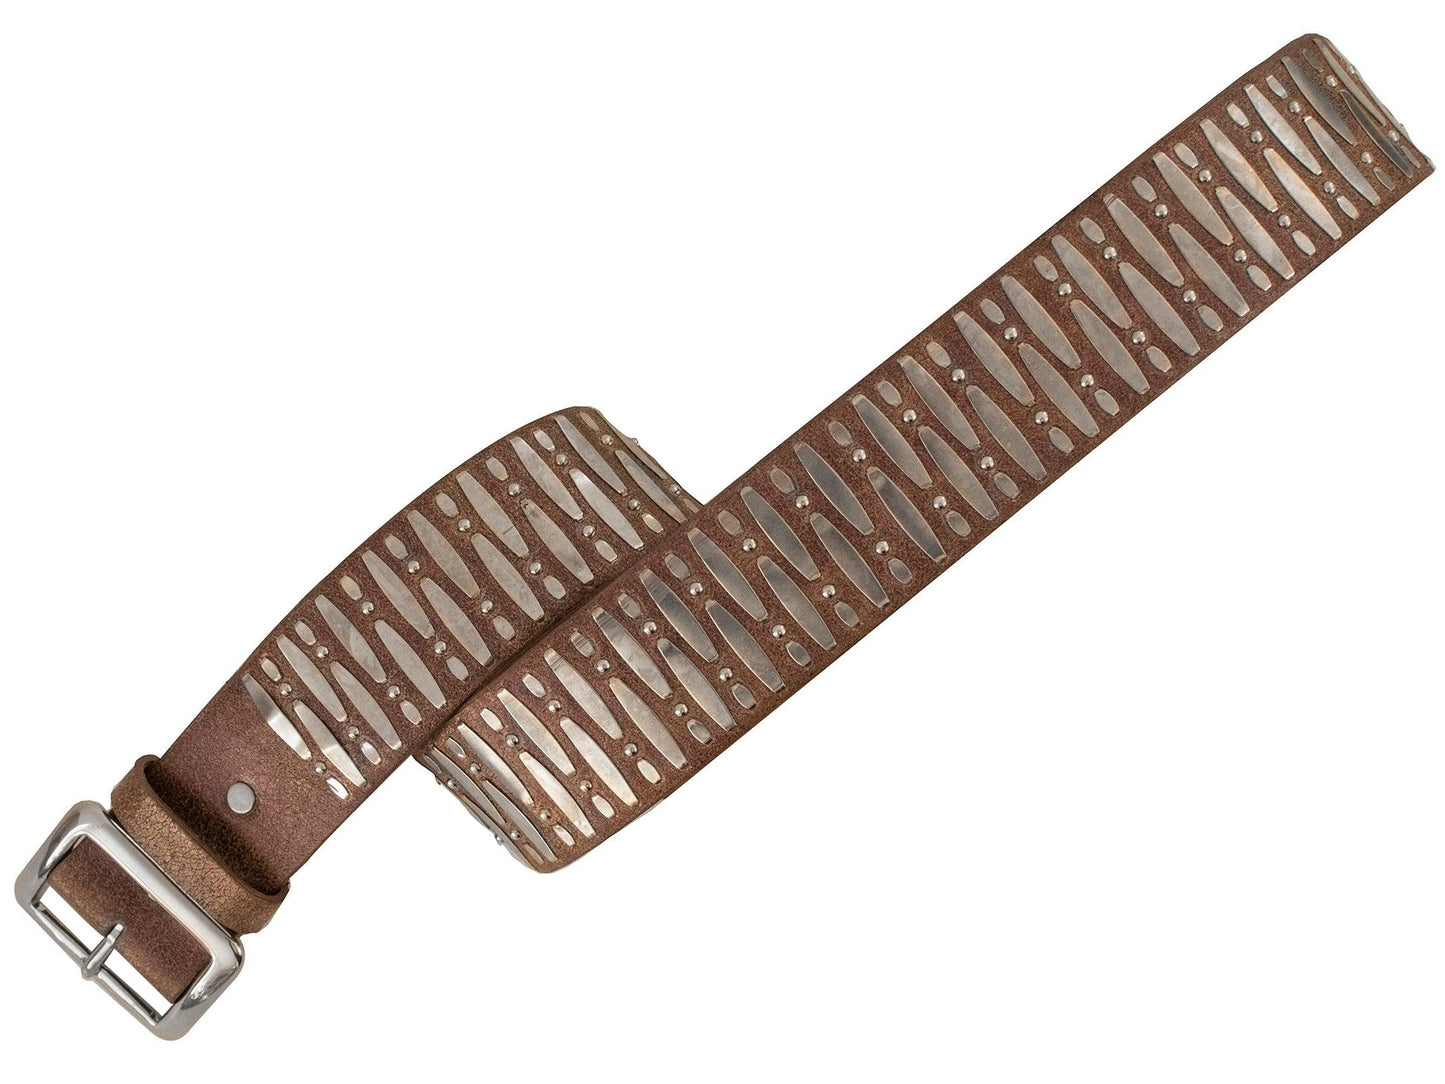 Zara 1.75" Belt - Calleen Cordero